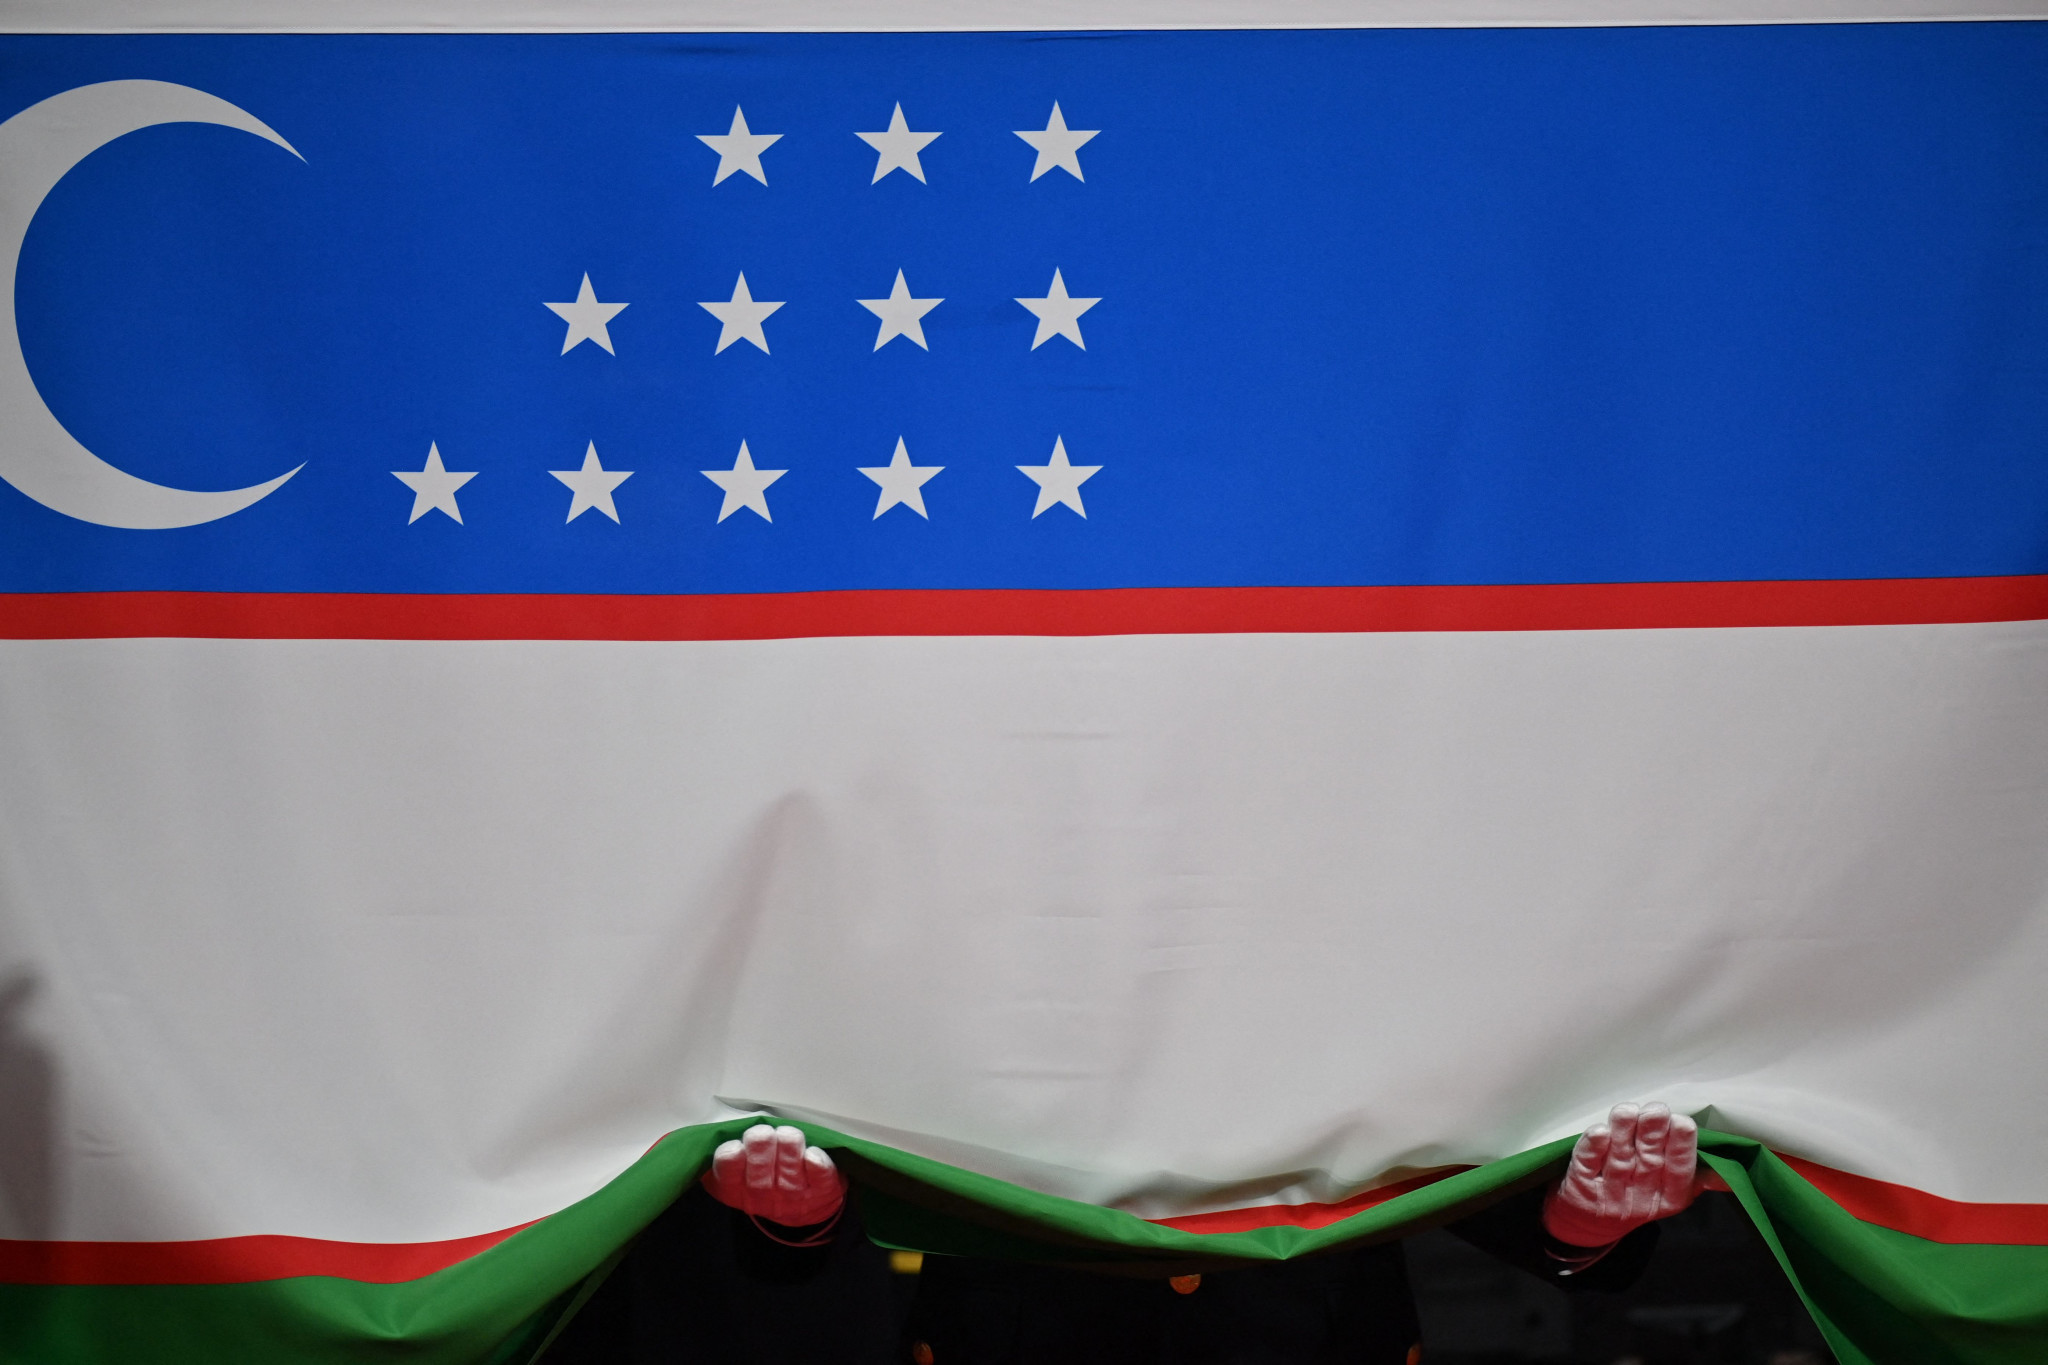 Dusmatov wins third Asian boxing title on stellar final day for Uzbekistan